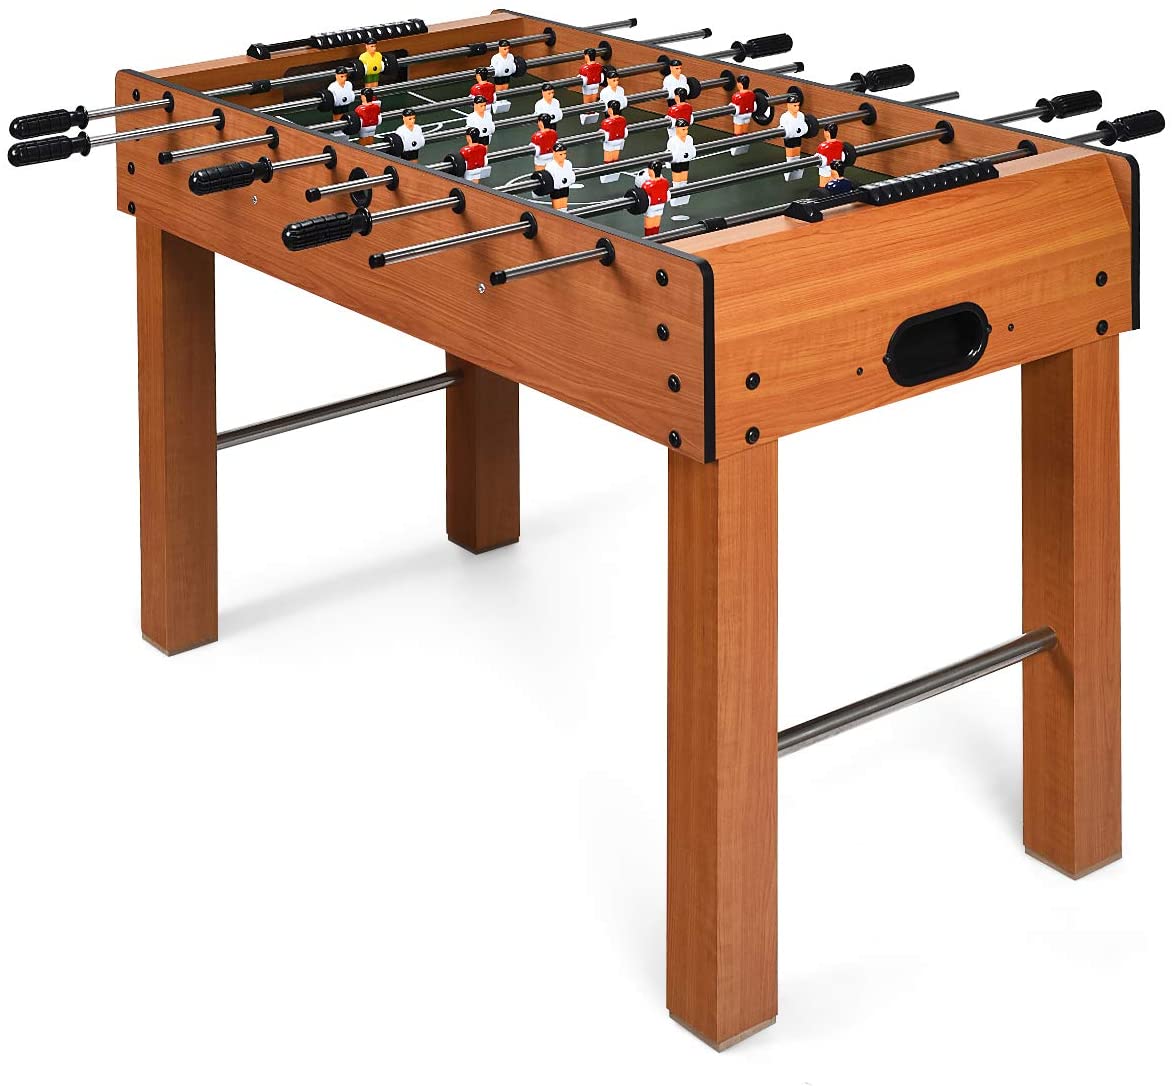 Goplus 48-inch Foosball Table